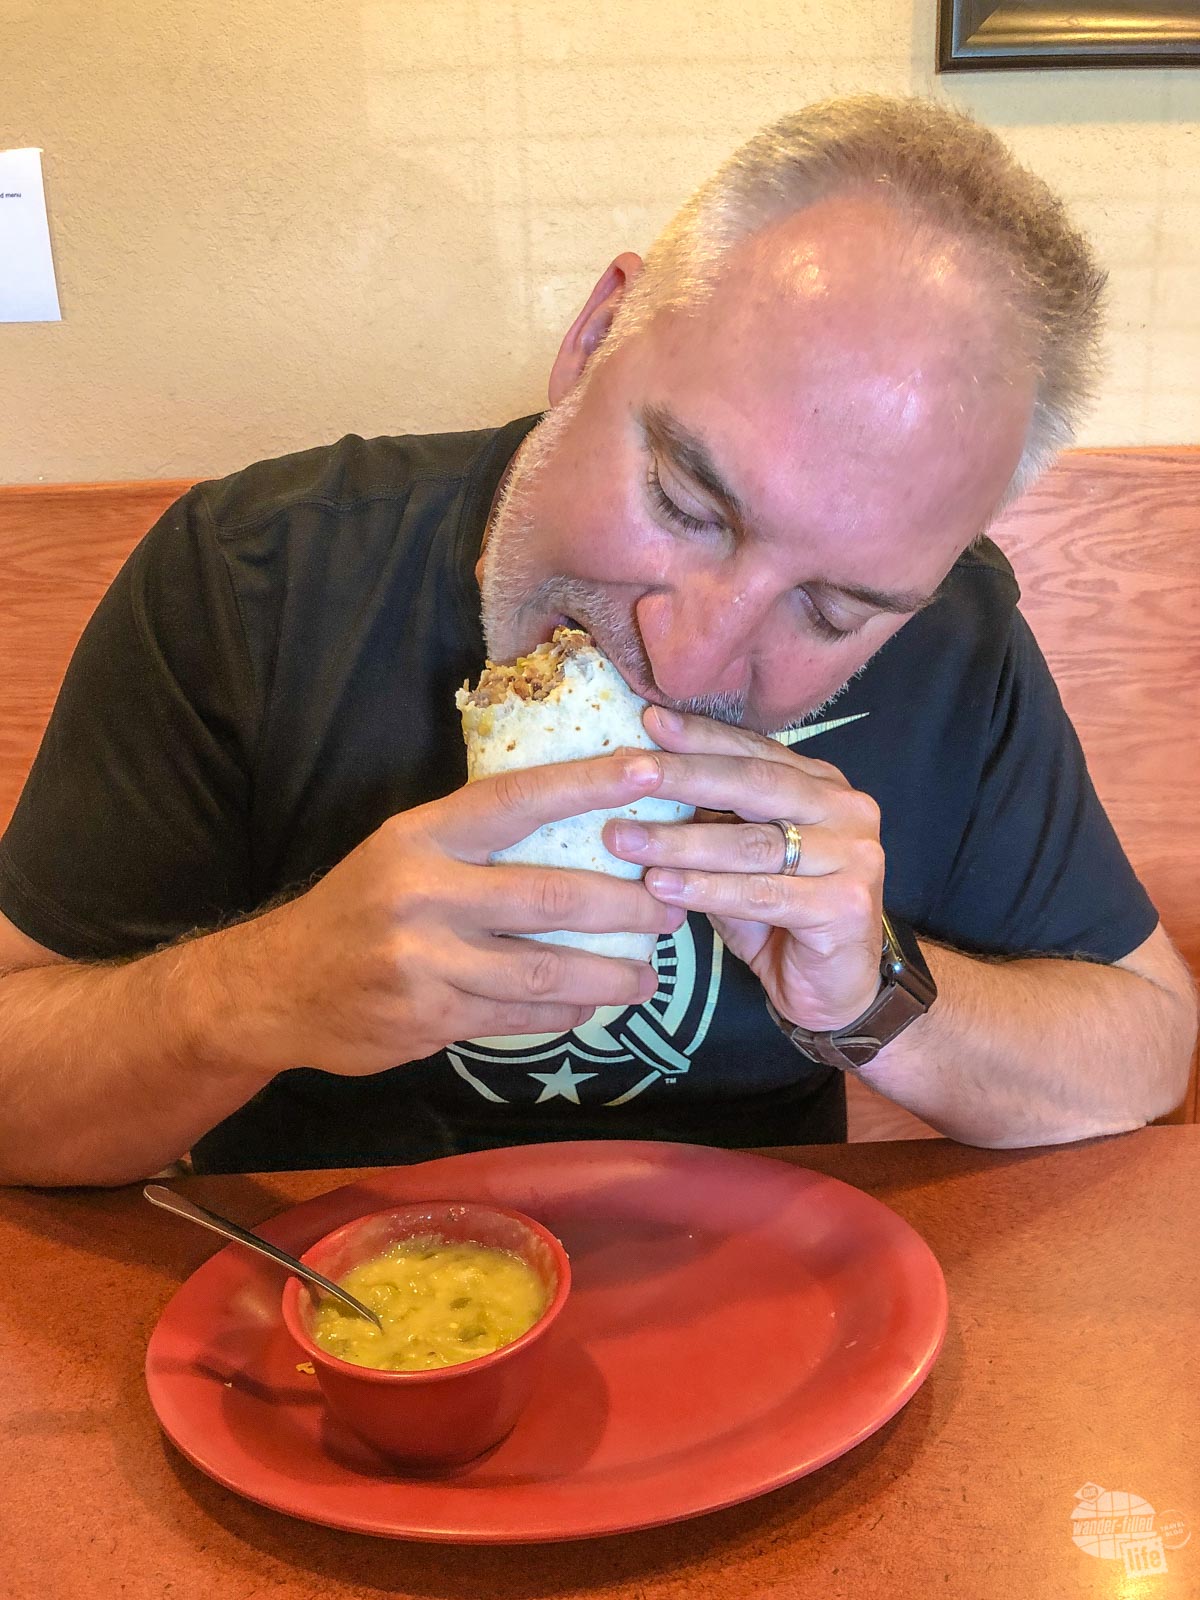 Grant really enjoyed the breakfast Burrito at Baker's Bakery in the Black Hills.